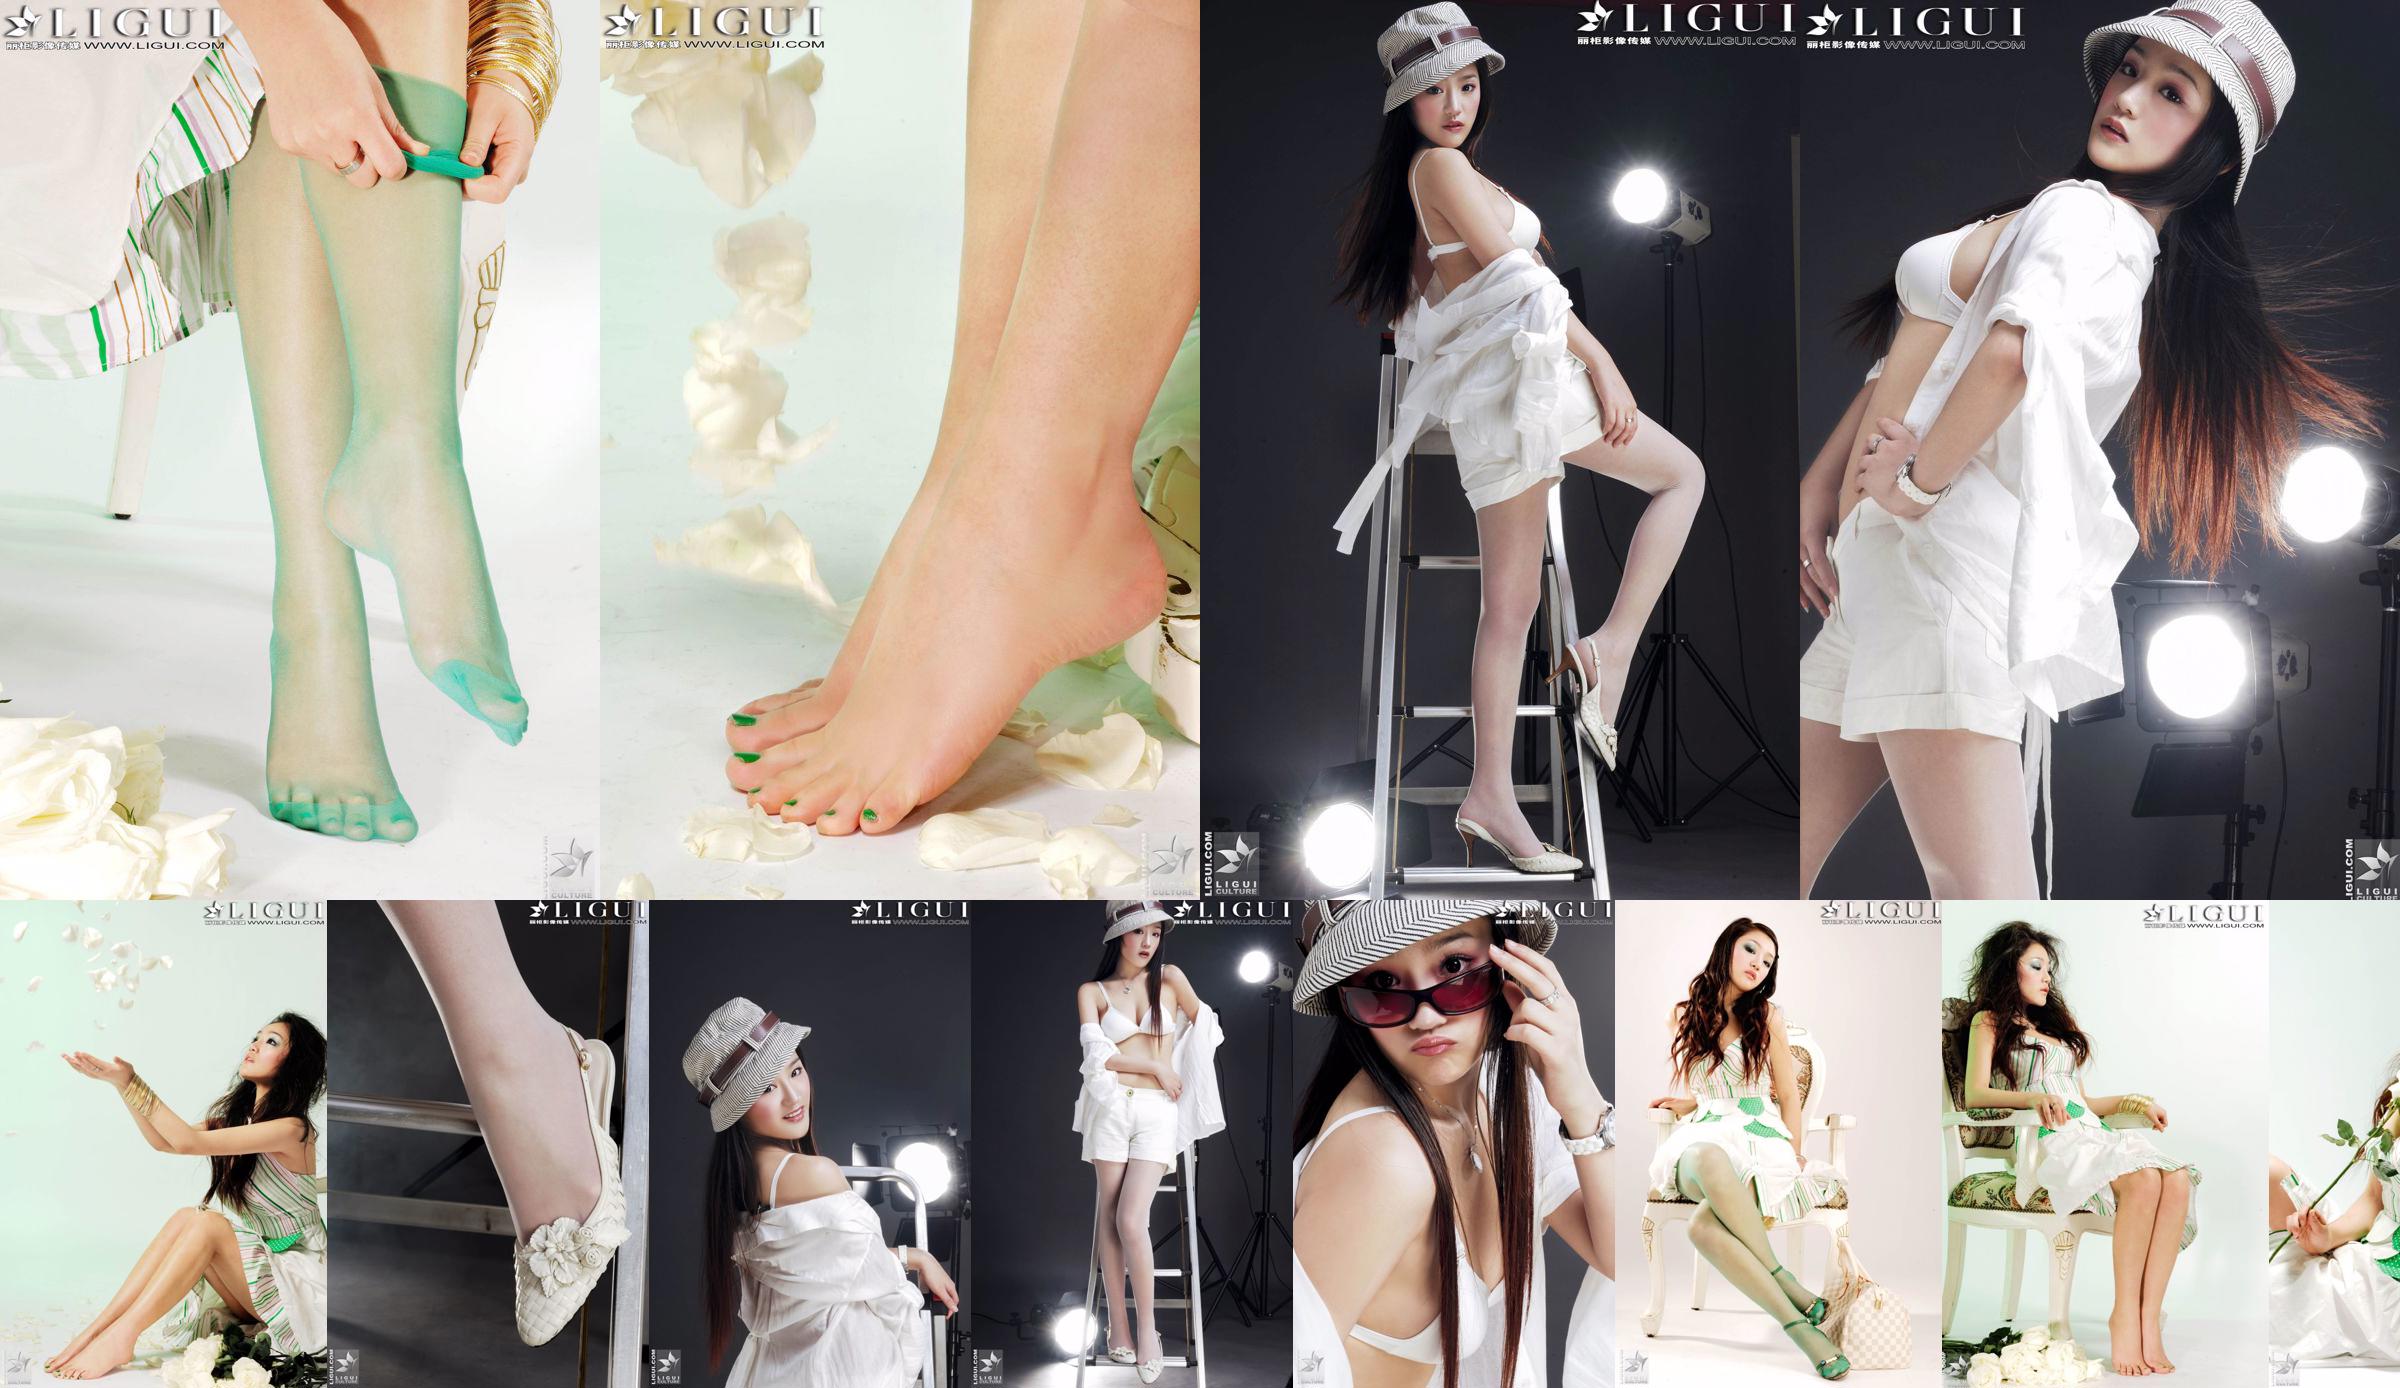 [丽 柜 贵 pé LiGui] Foto "Fashionable Foot" do modelo Zhang Jingyan de belas pernas e pés de seda No.fb03ad Página 1